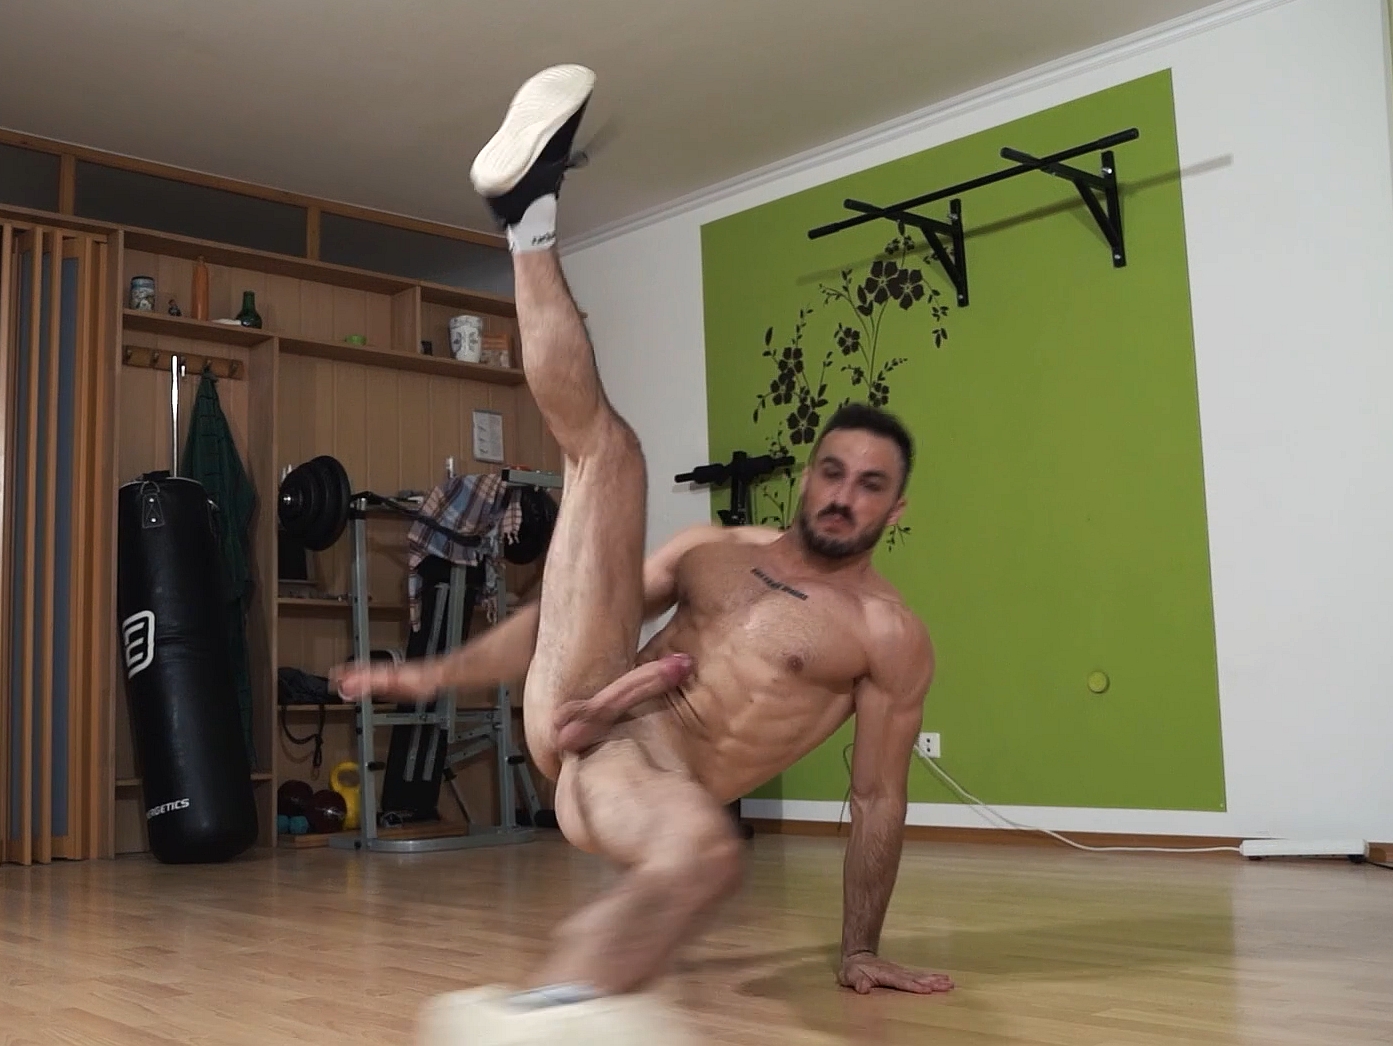 Breakdancing Porn - HOT Alpha naked breakdance with boner (Full HD) - ThisVid.com